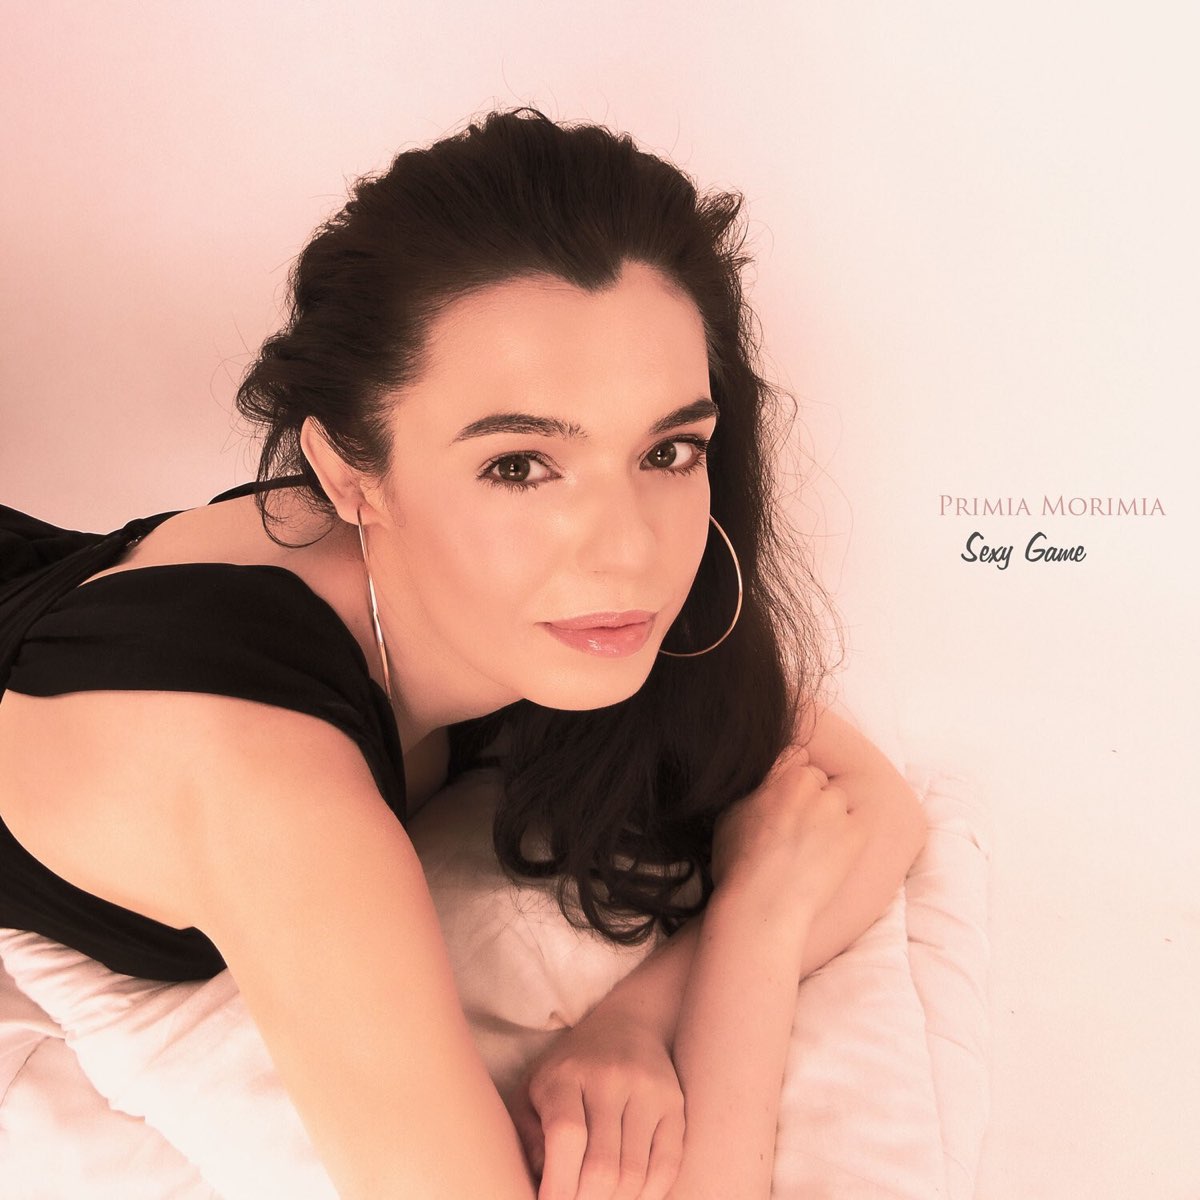 Sexy Game - Single by Primia Morimia on Apple Music